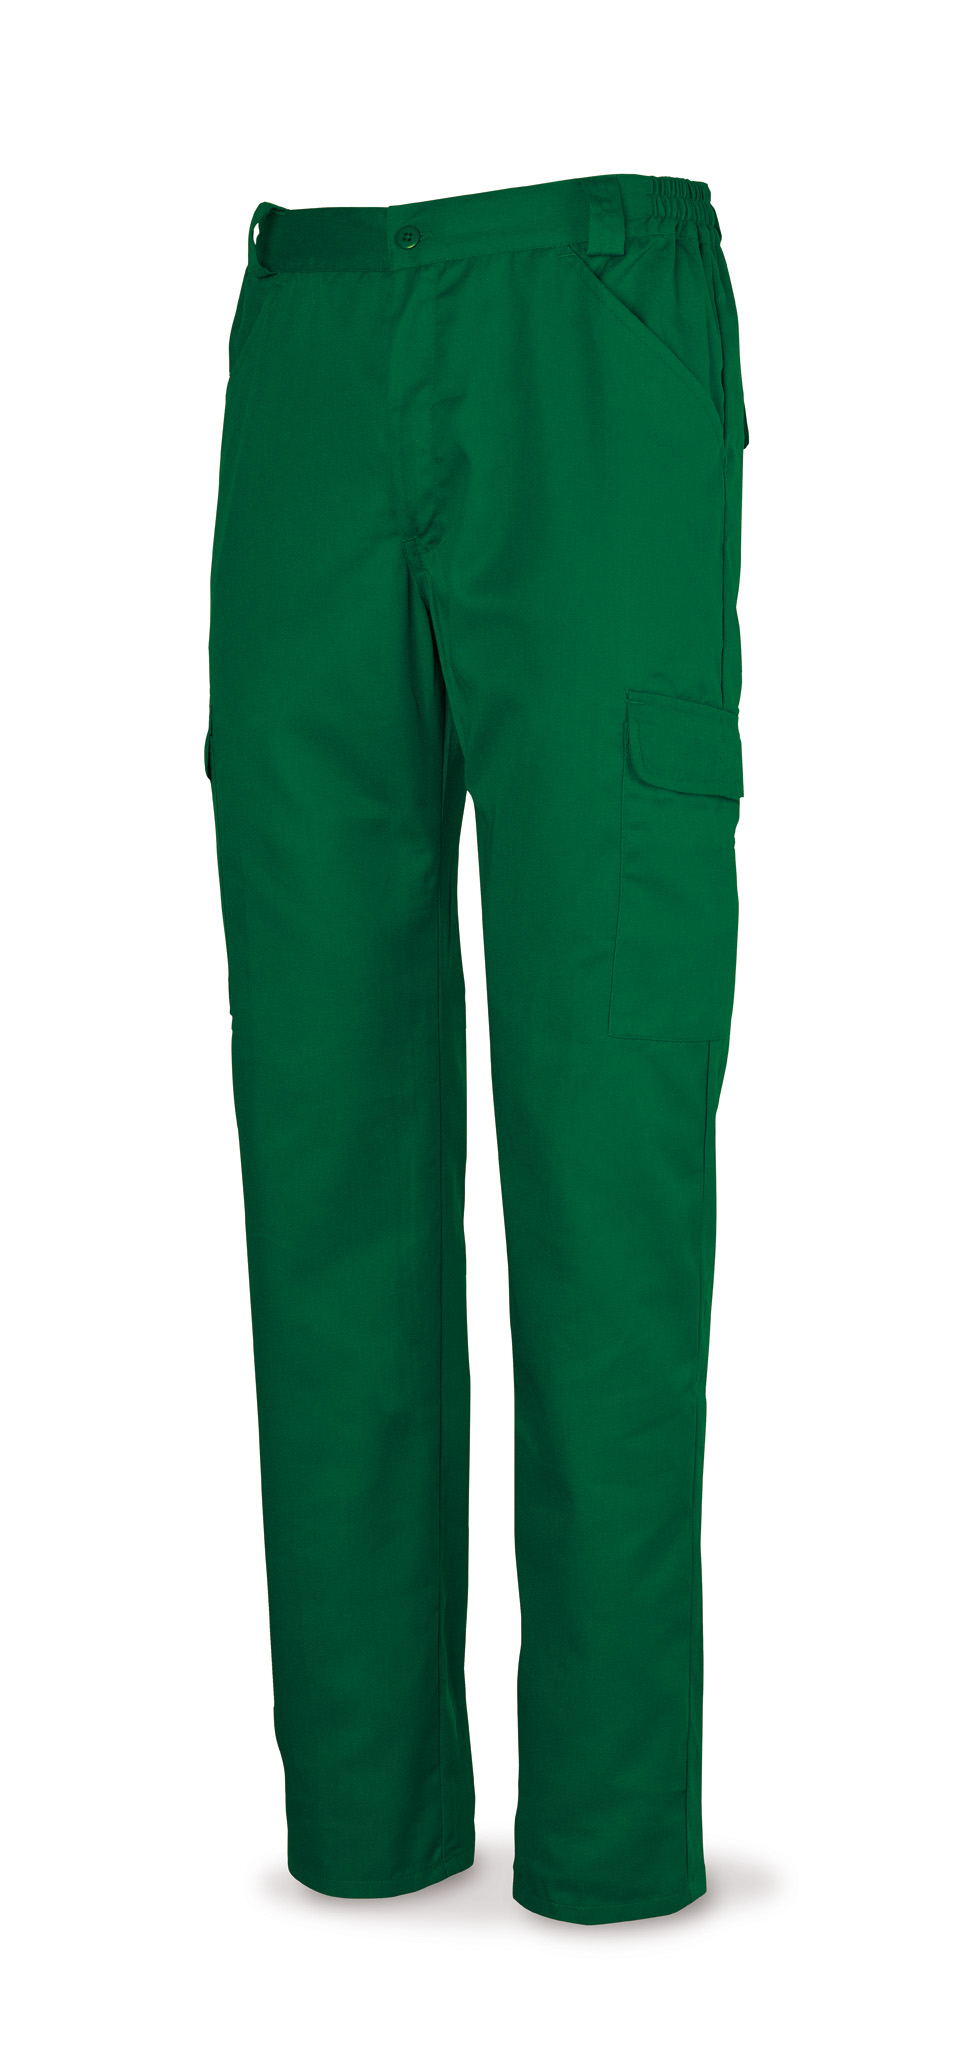 388-PV Workwear Basic Line Tergal. Green.